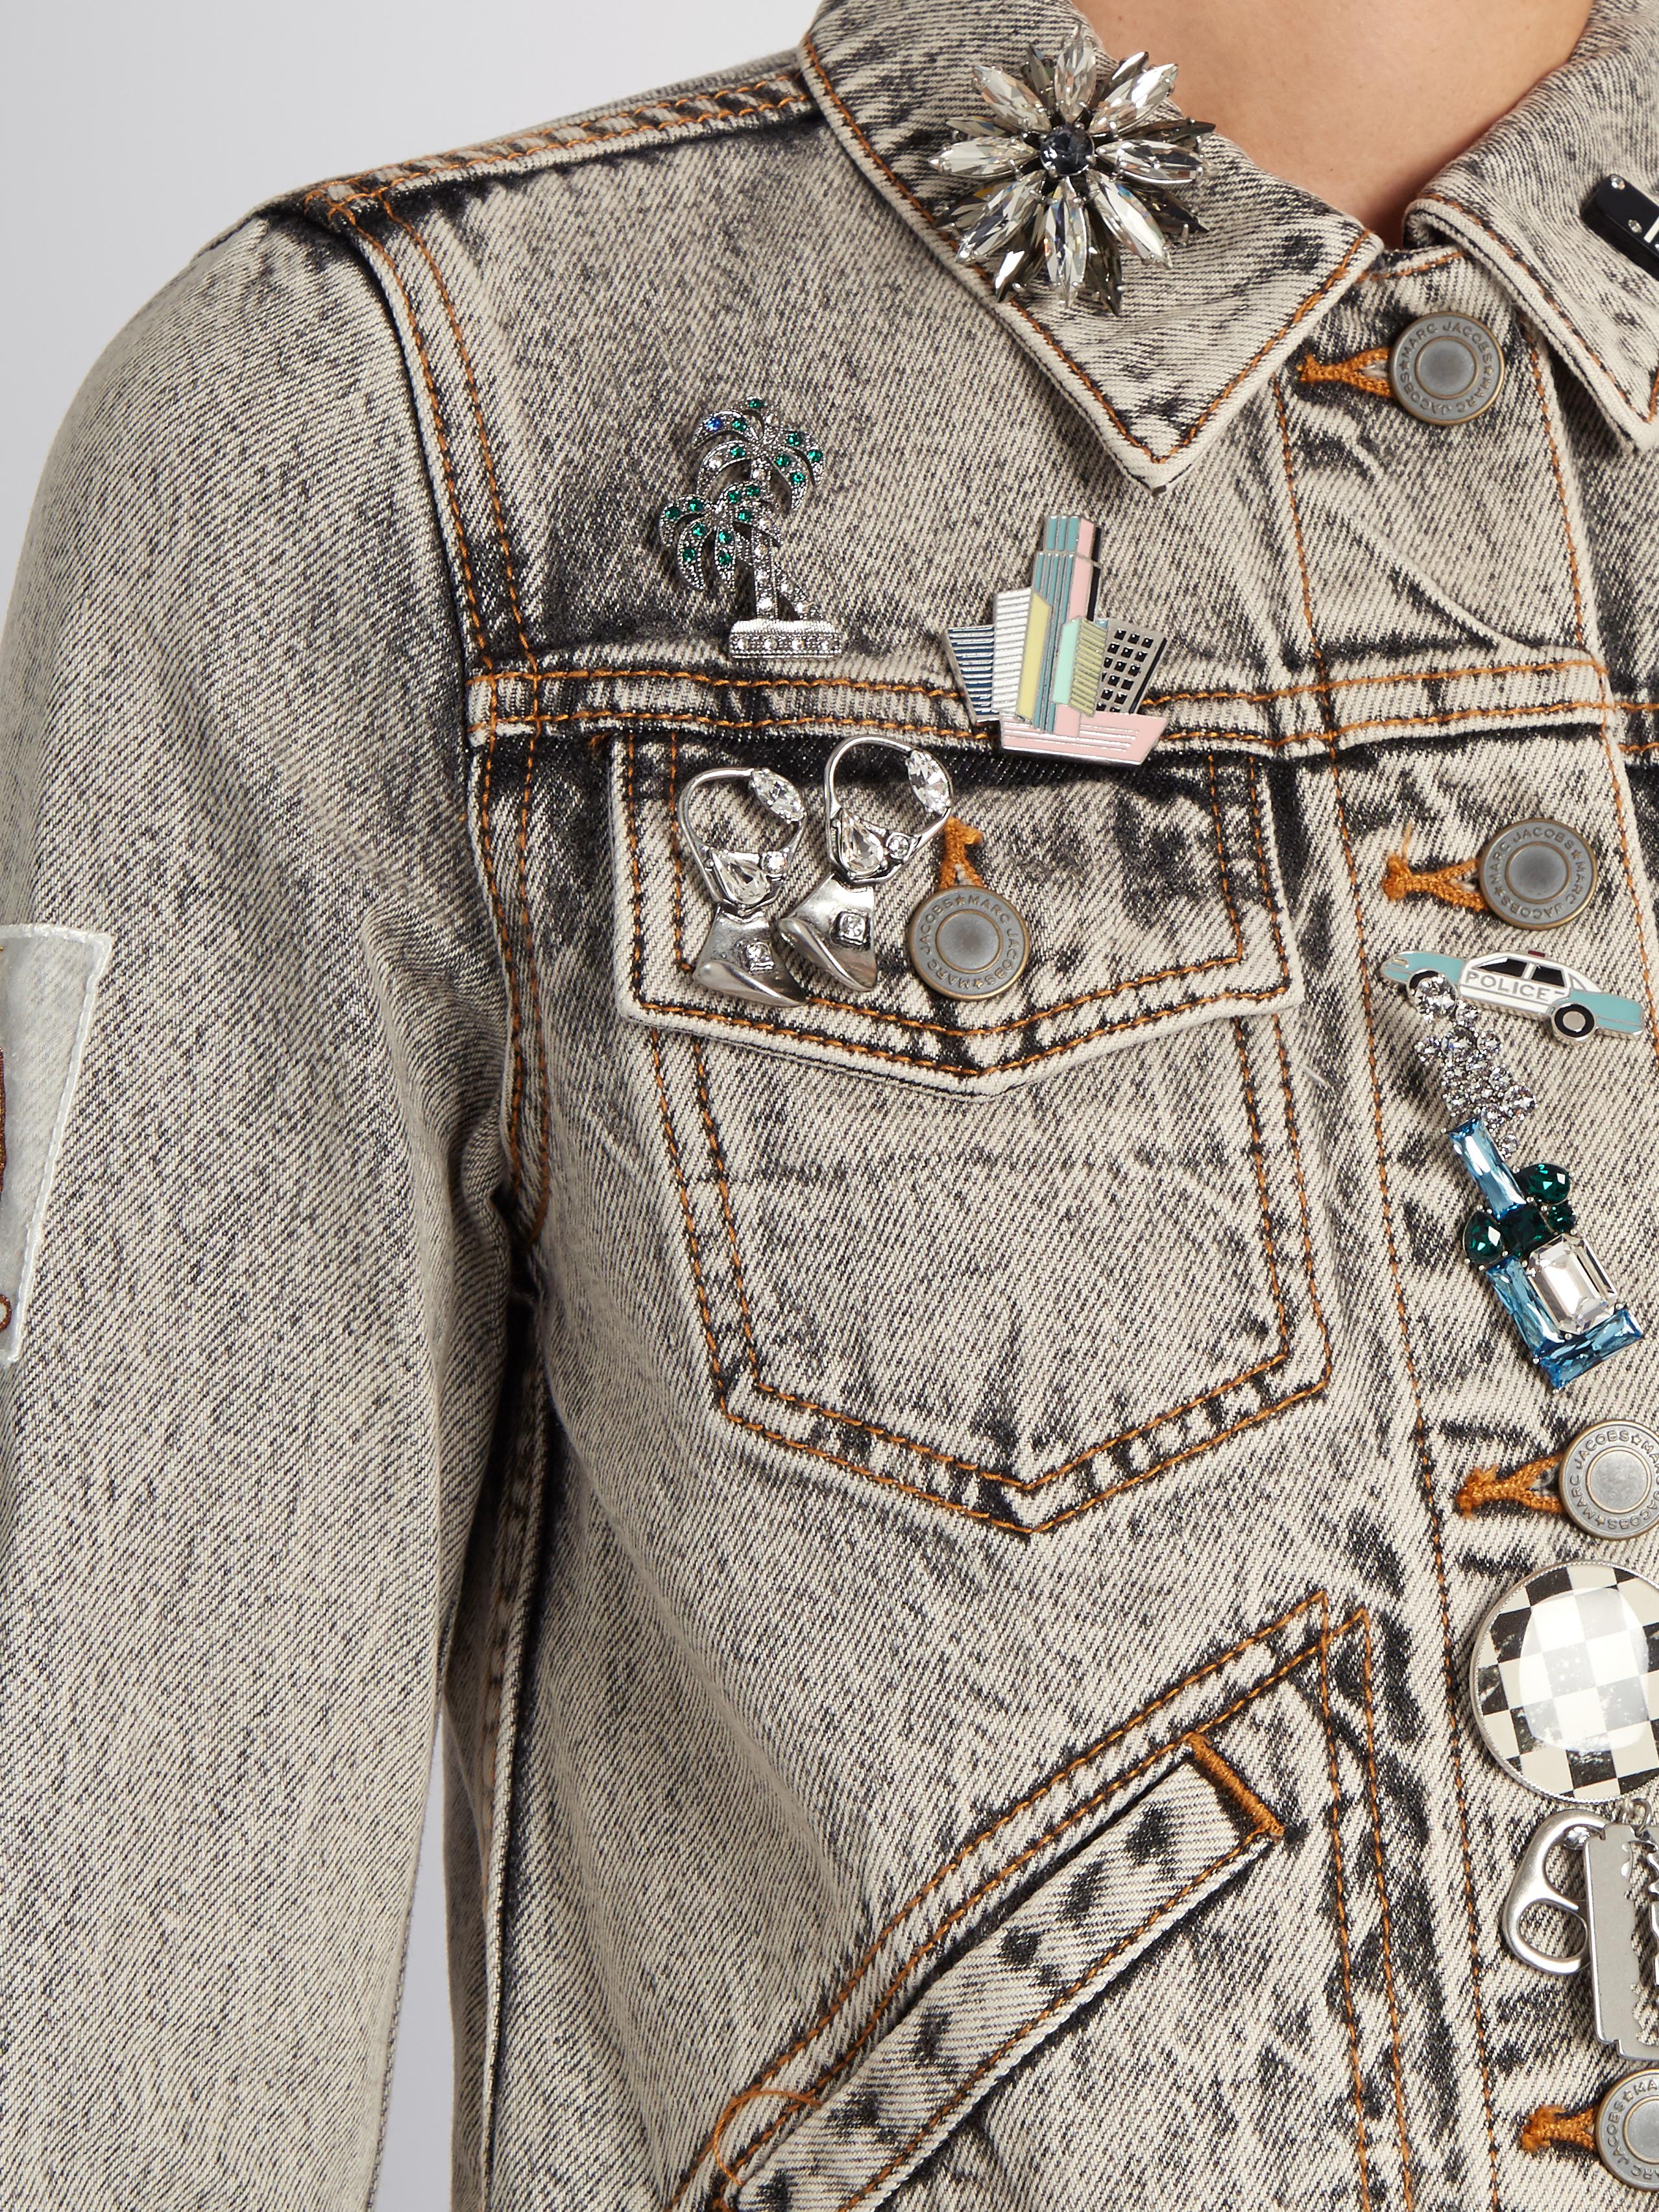 Marc Jacobs Paradise-embellished Denim Jacket in Gray